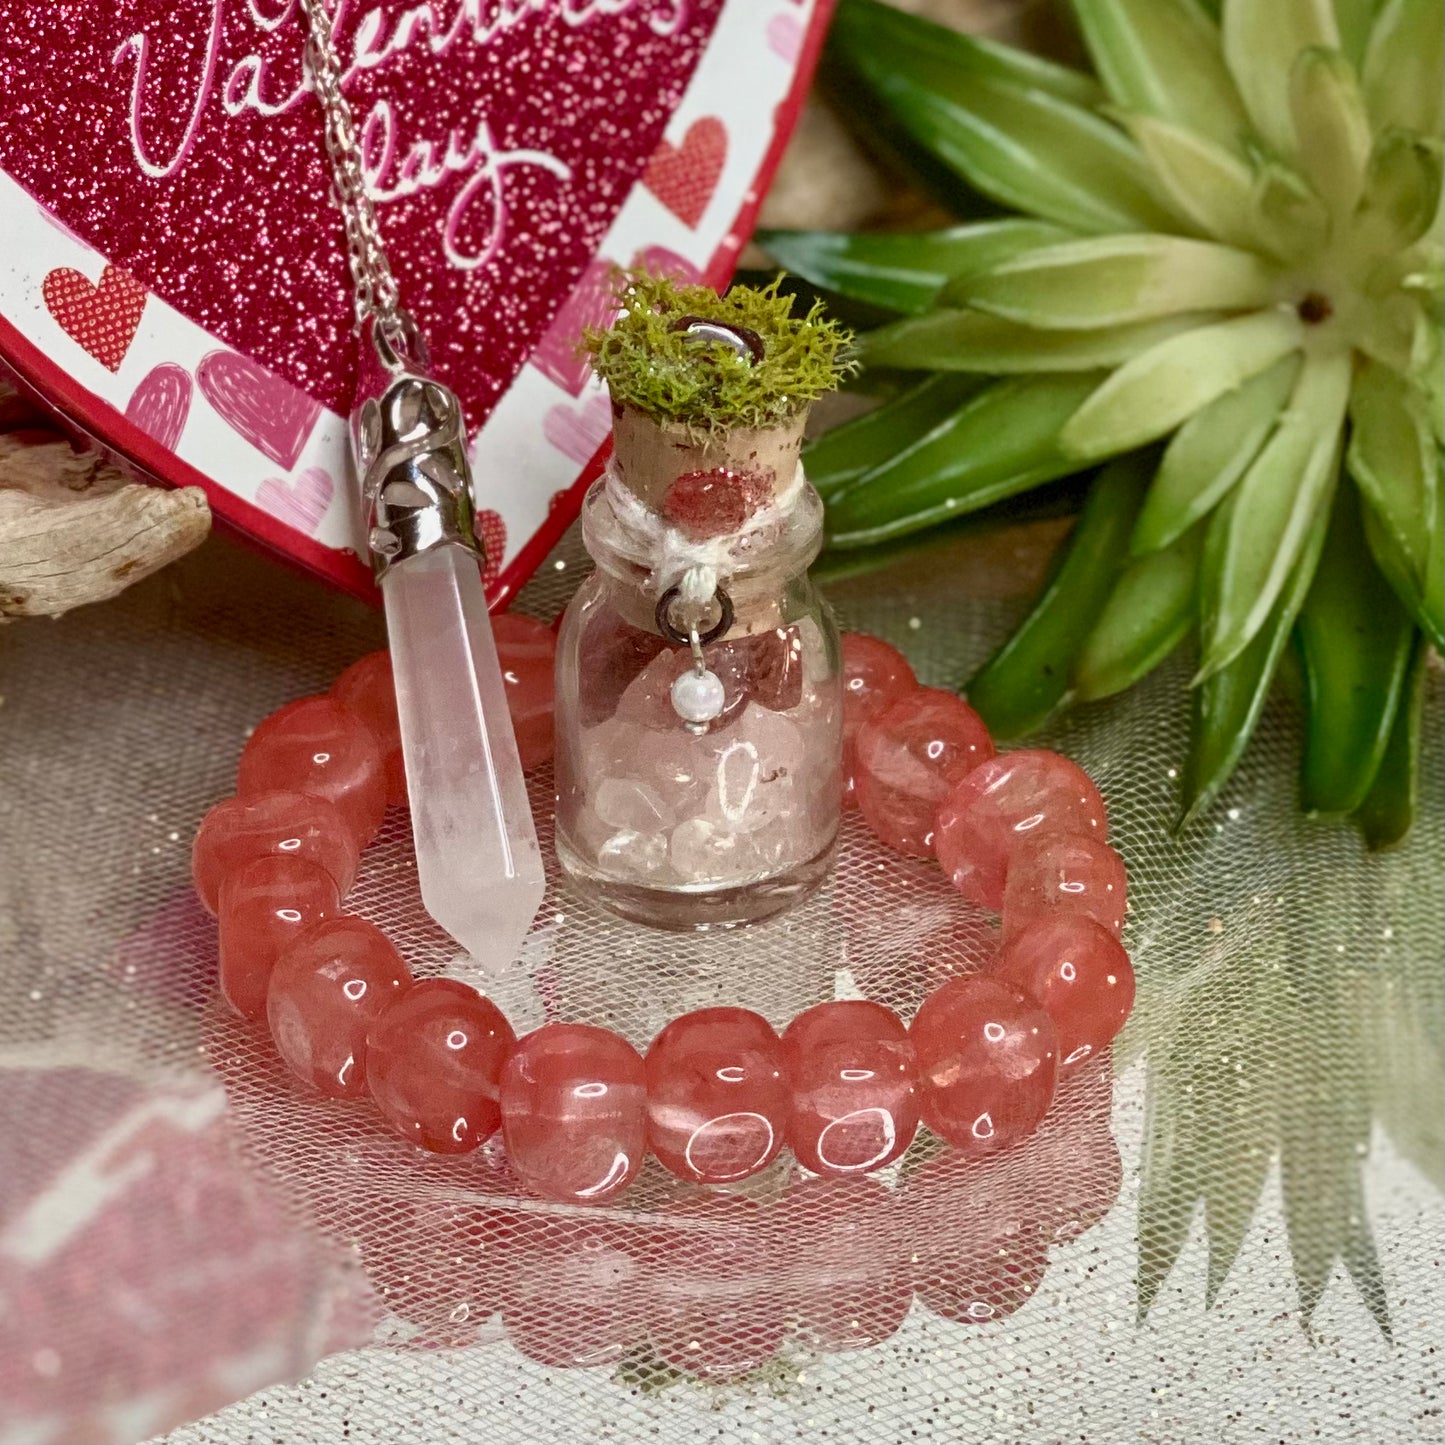 Positively Lovely Gift Set: Cherry Quartz Bracelet, Quartz Pendant, and Mini Crystal Jar